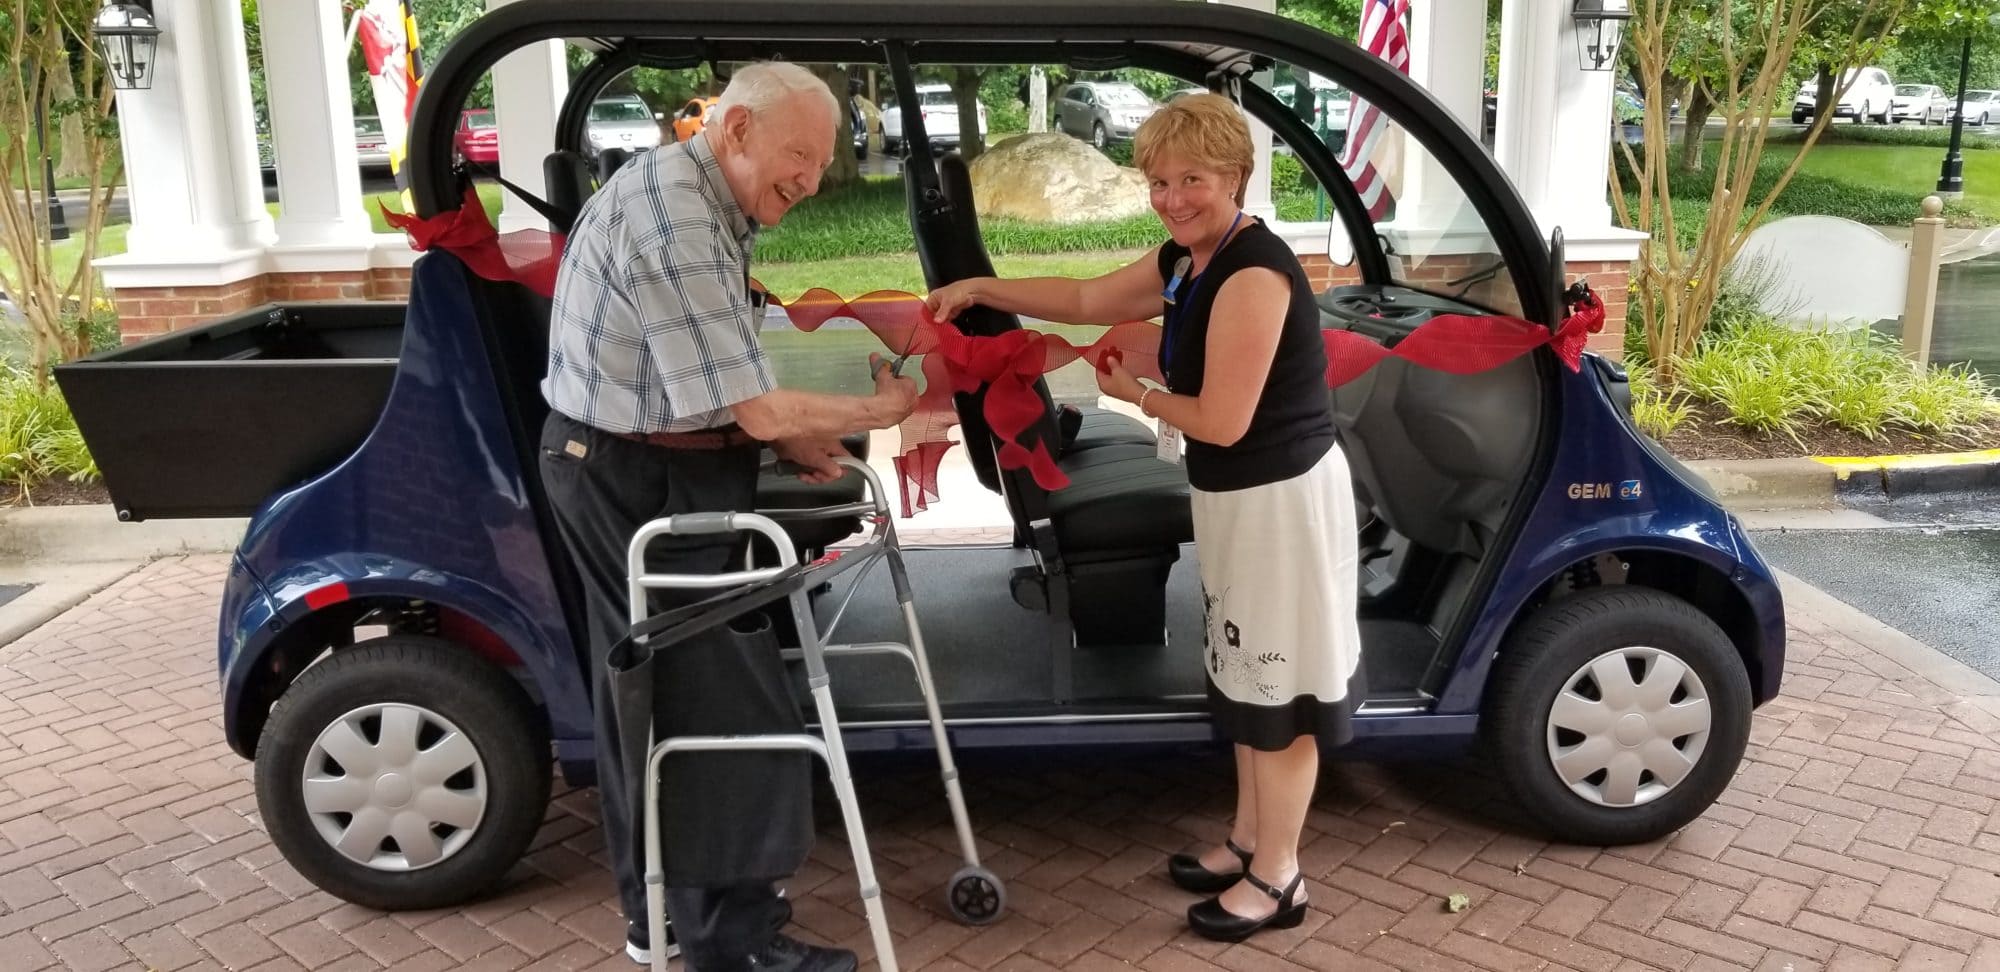 Kensington Park Senior Living resident and director cut the ribbon on the community's new Gem E4 electric passenger vehicle